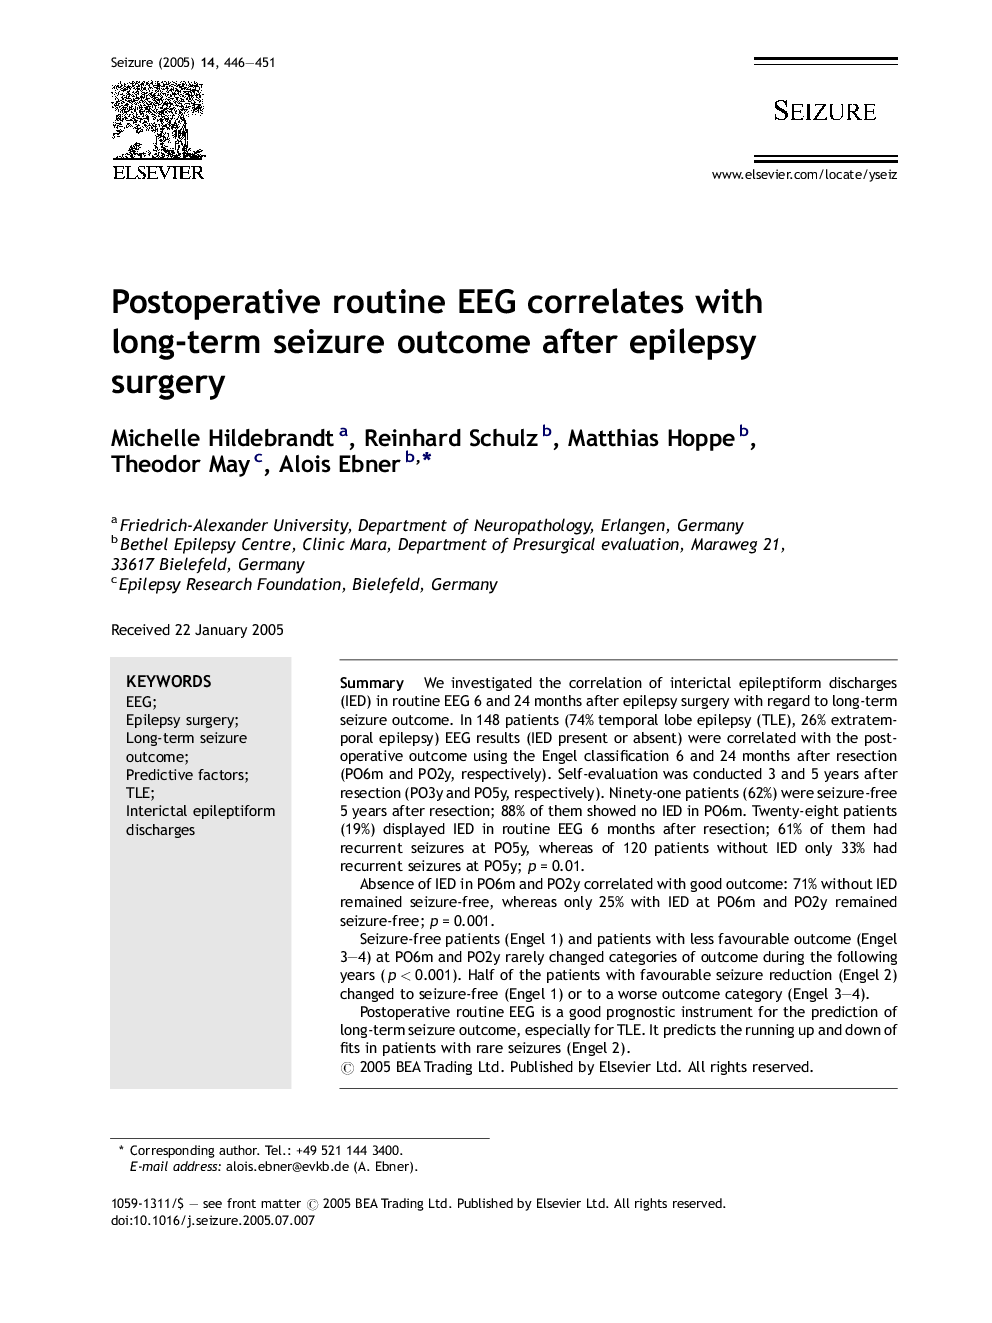 Postoperative routine EEG correlates with long-term seizure outcome after epilepsy surgery